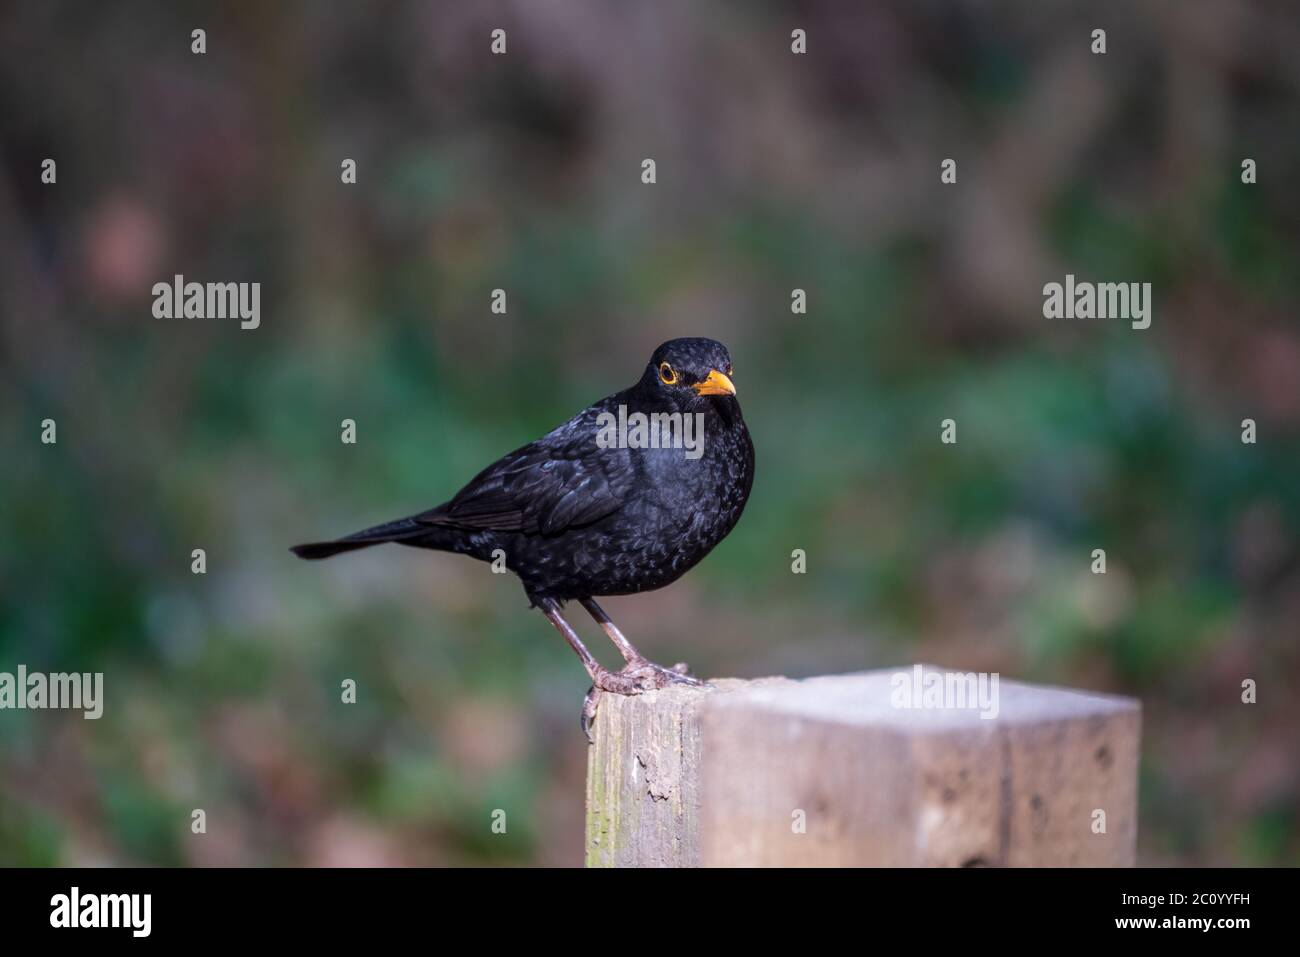 Beautiful Blackbird in a natural enviroment Stock Photo